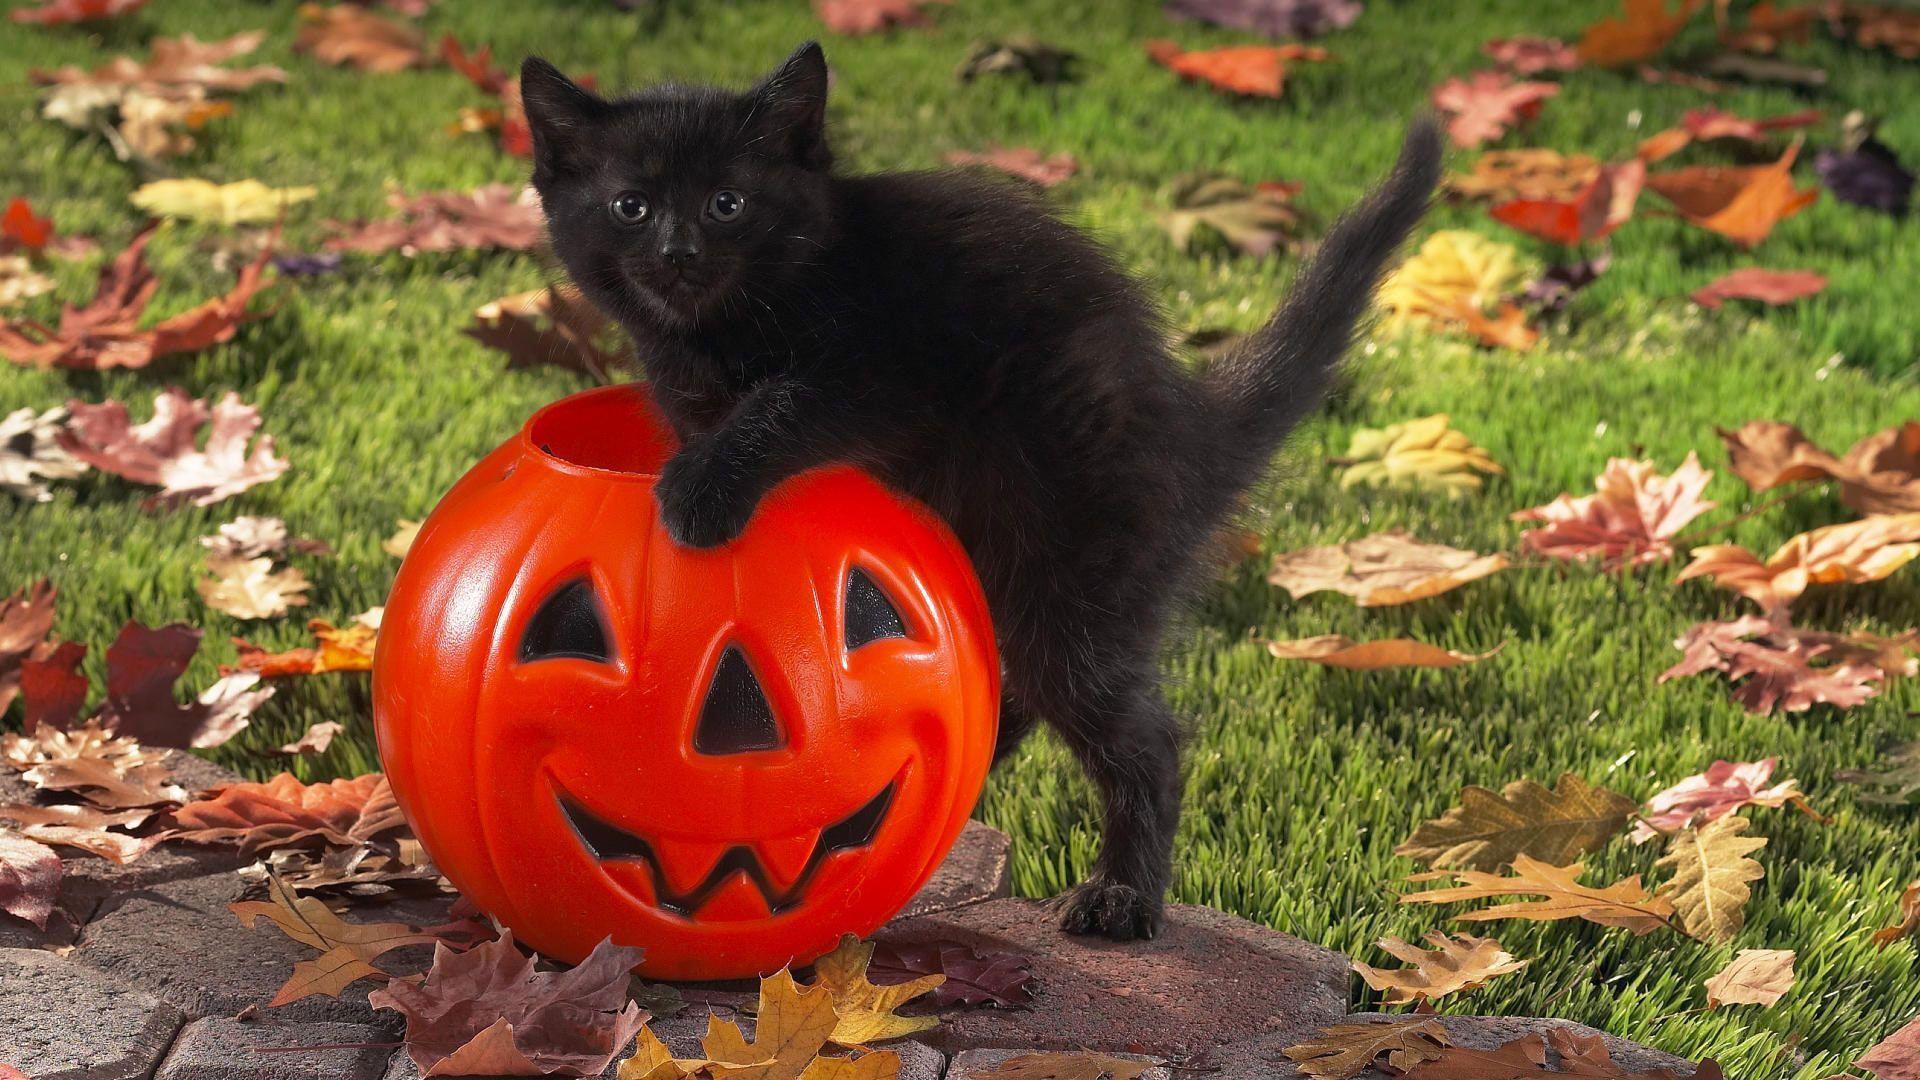 Cute Black Cat Halloween Wallpapers - Top Free Cute Black Cat Halloween